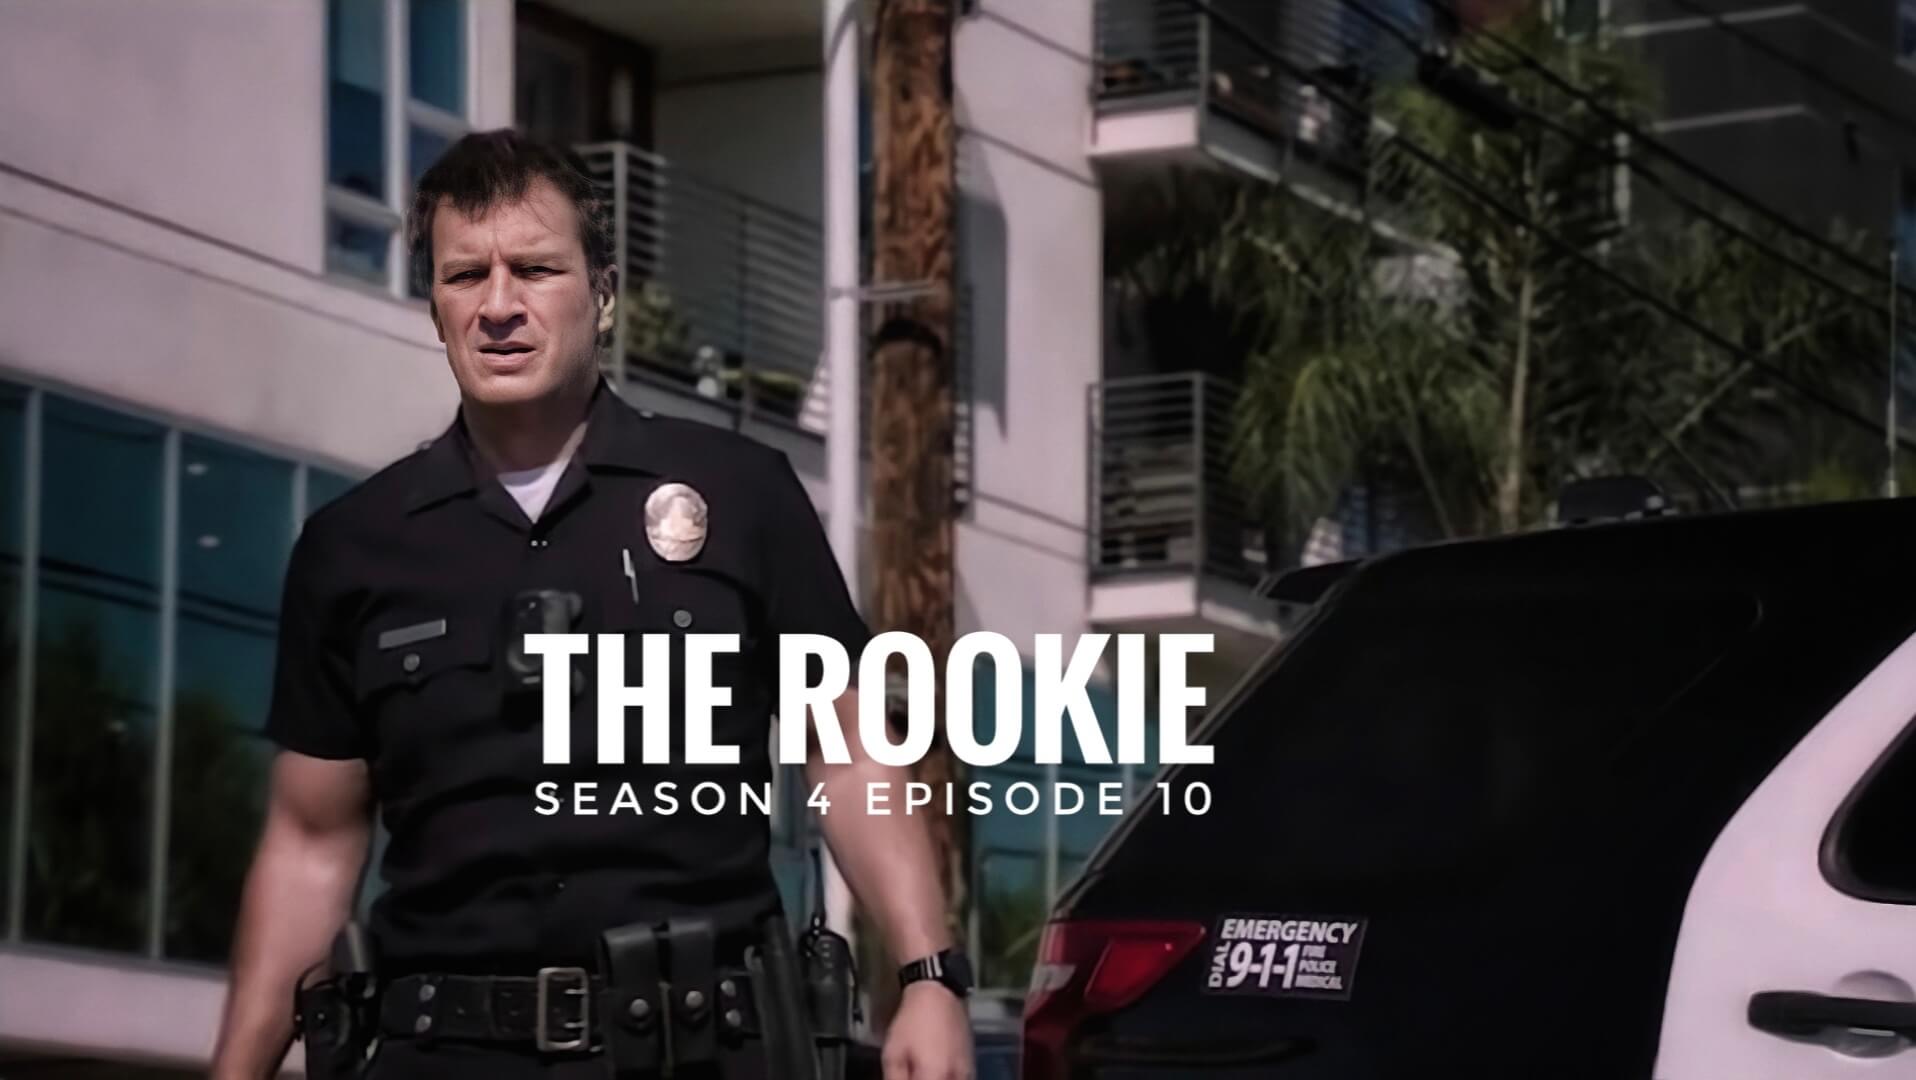 The Rookie season 4 episode 10 Release Date